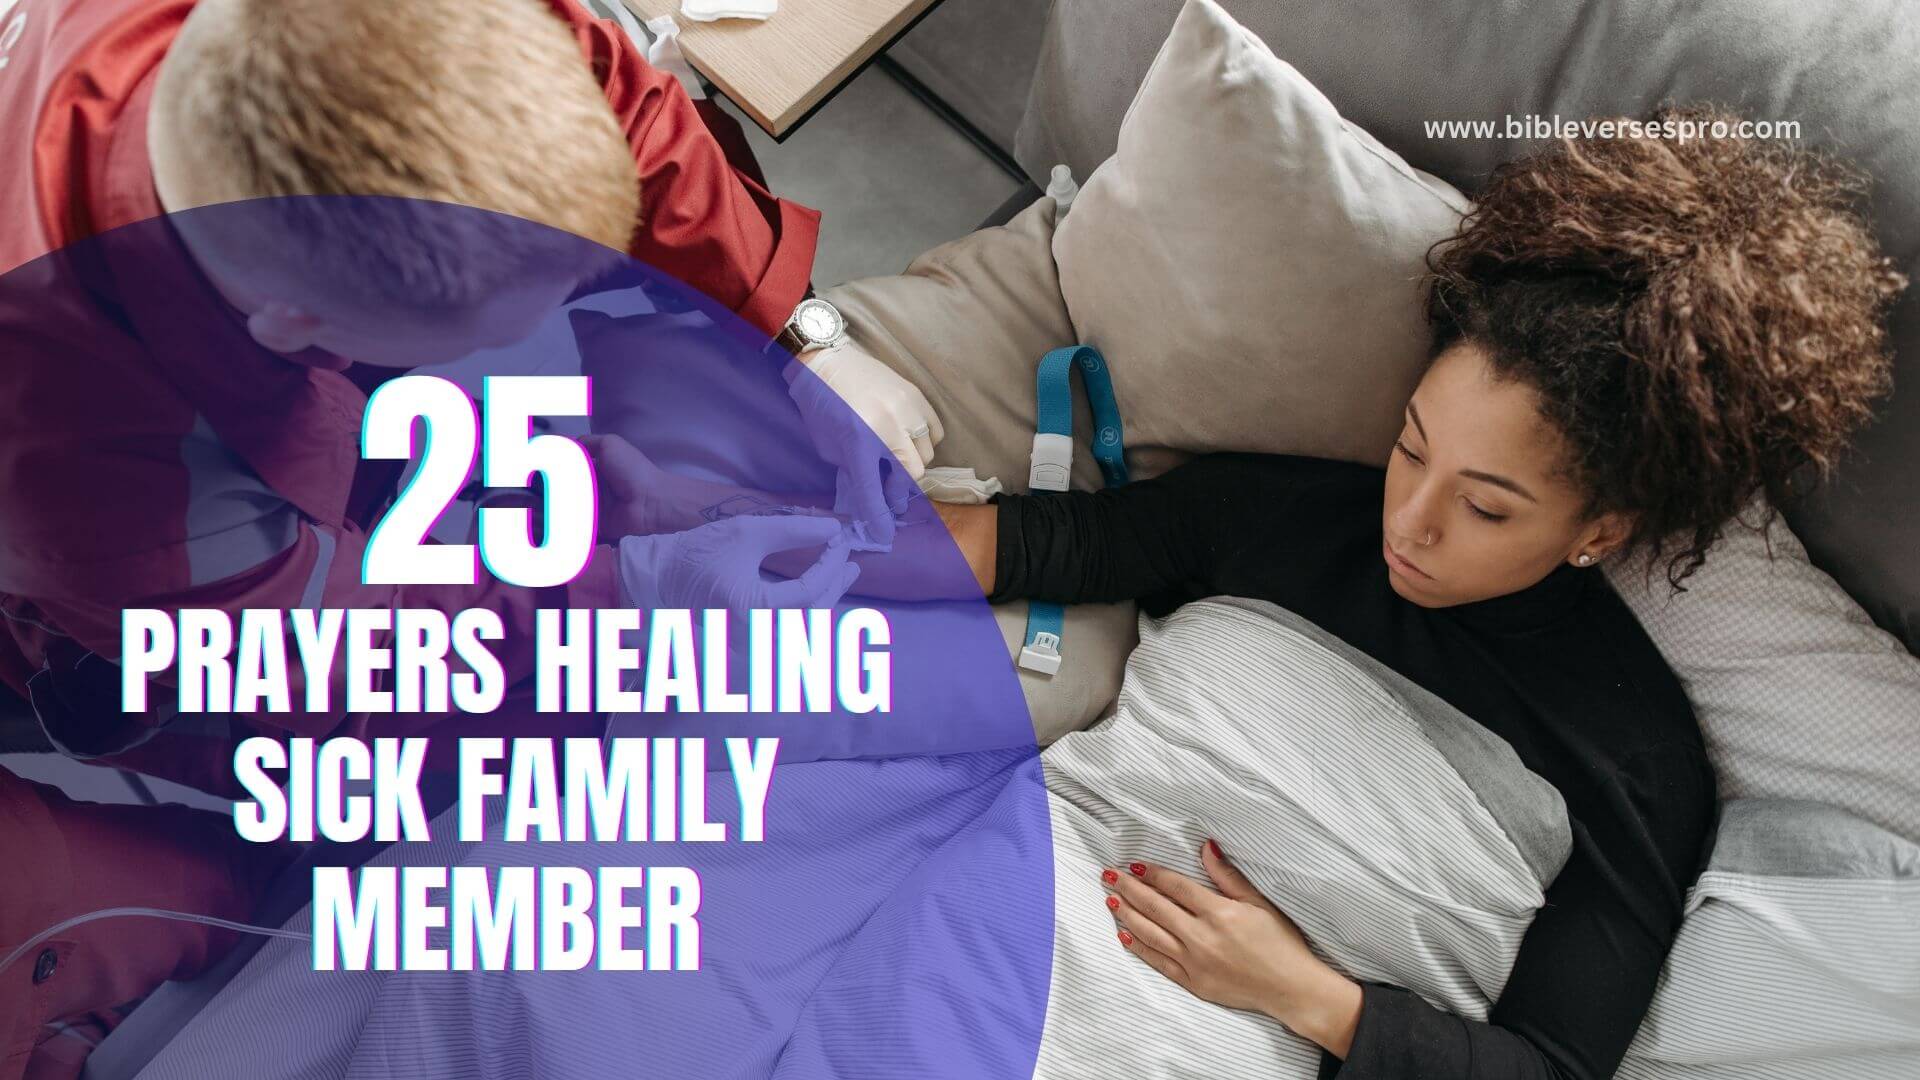 21 powerful prayers healing sick family member